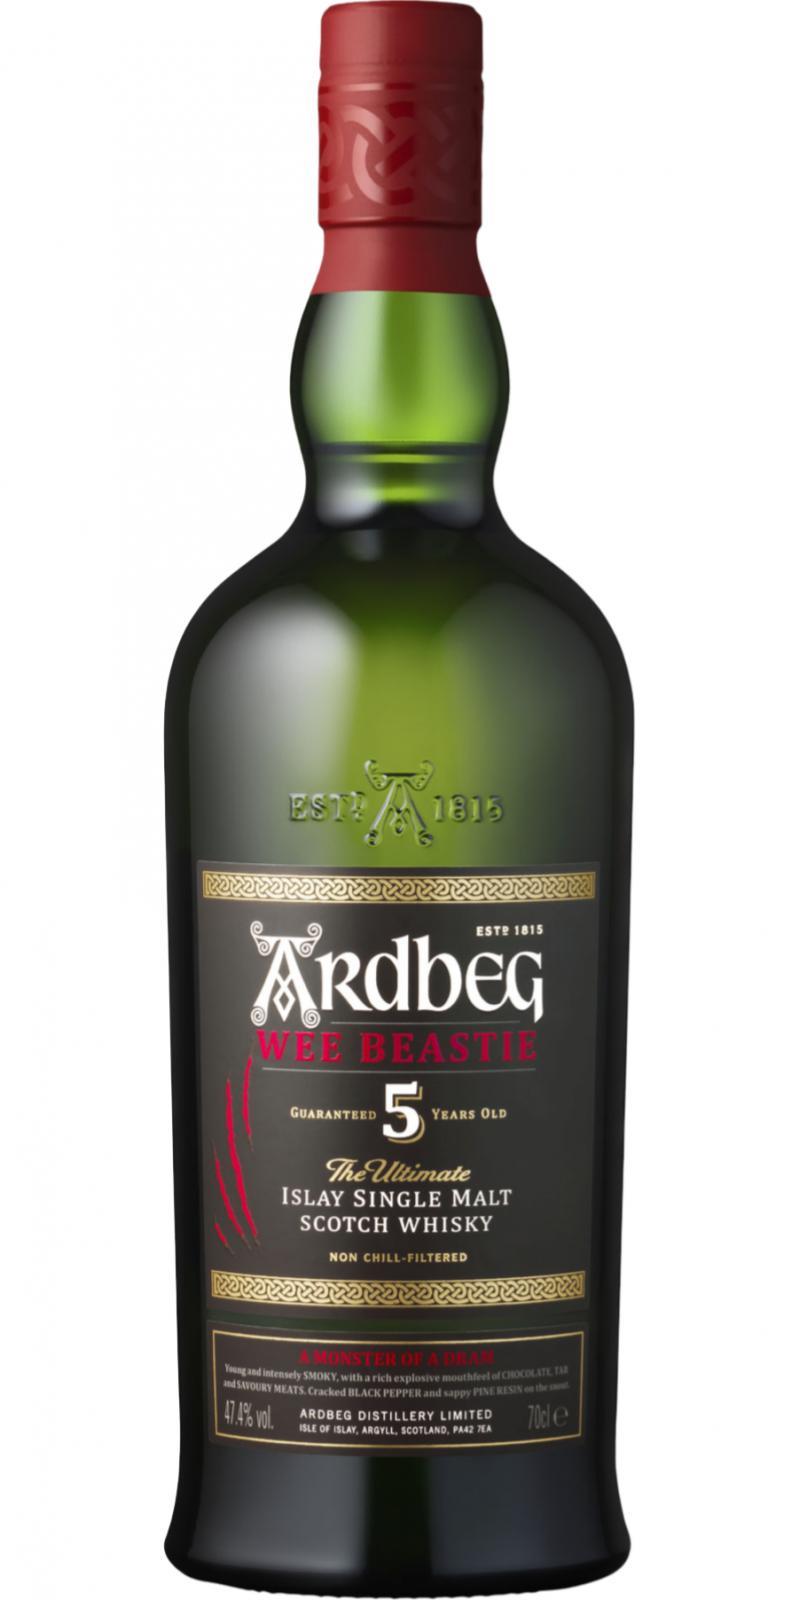 Ardbeg "Wee Beastie" Islay Single Malt Scotch 70cl 47,4%